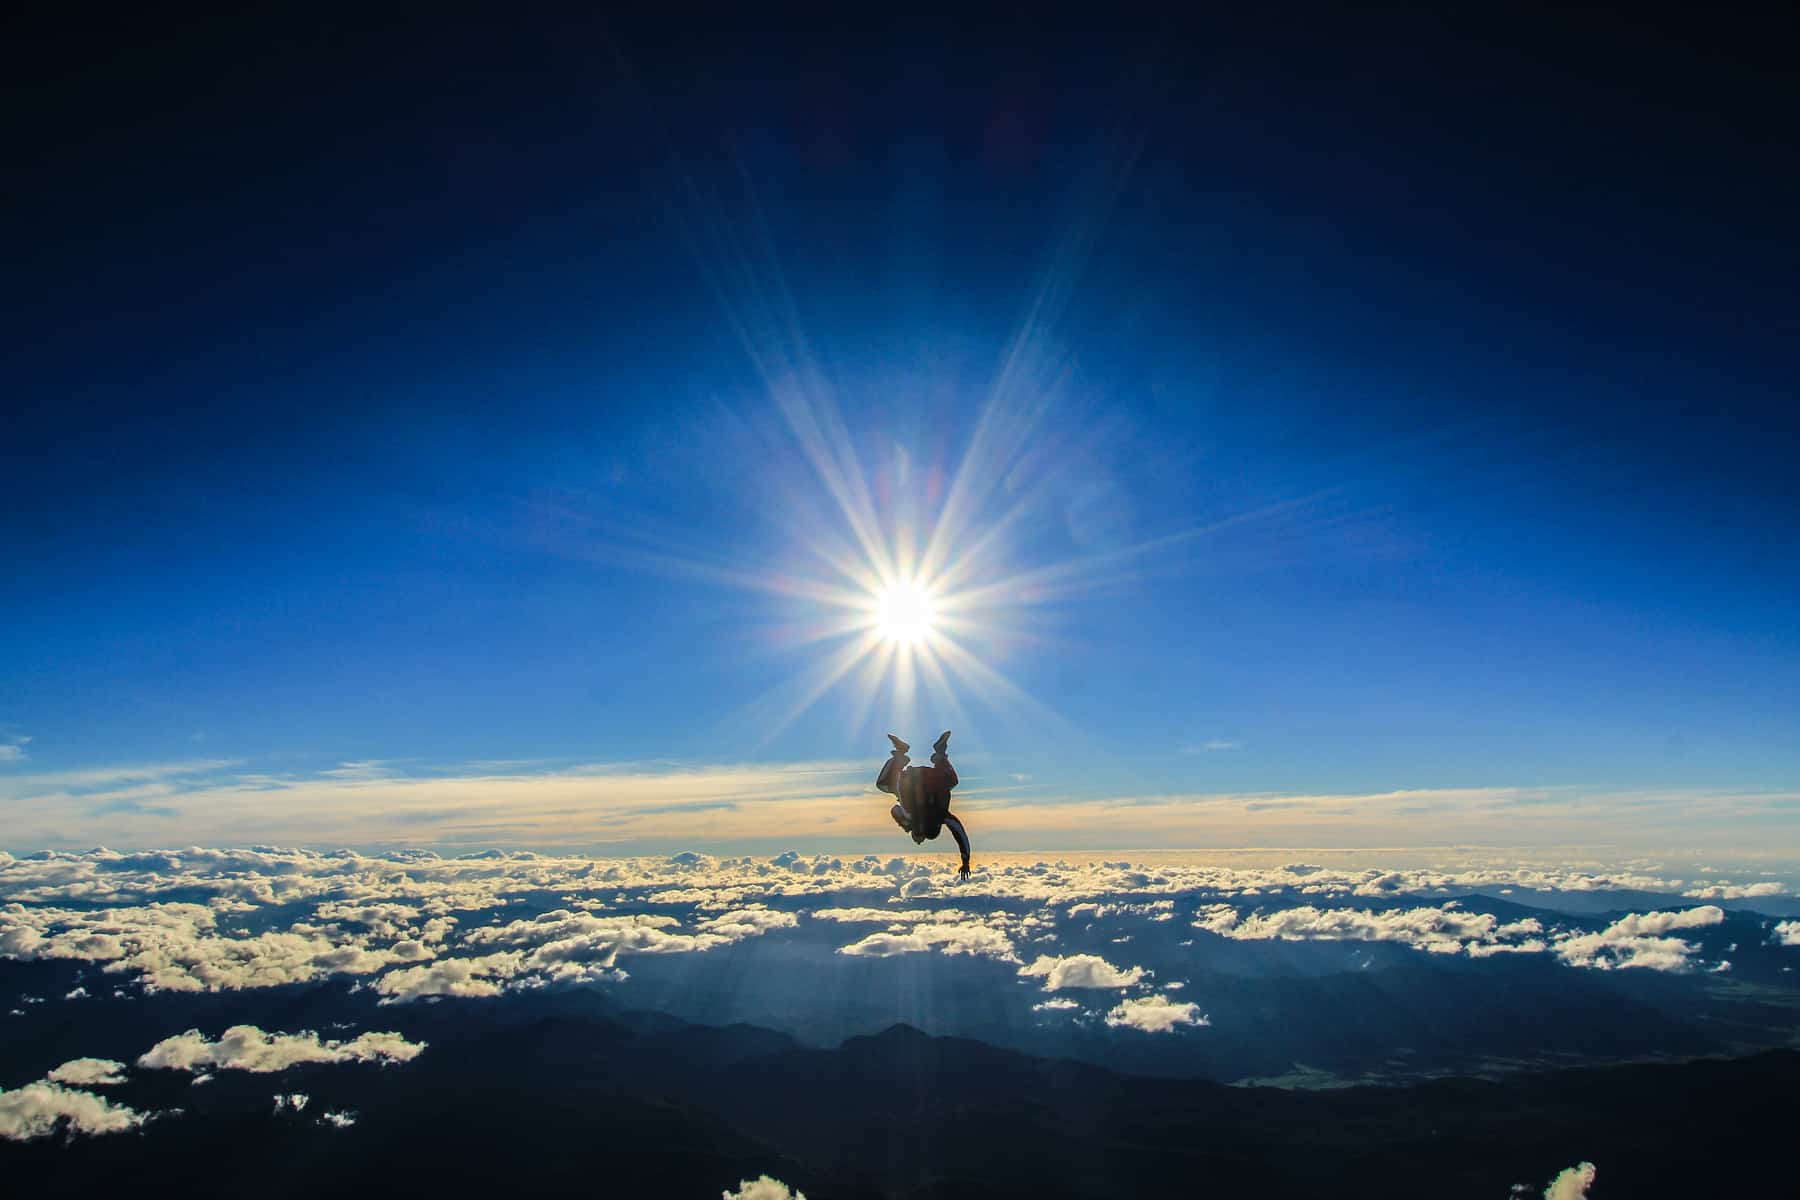 Abel Tasman is New Zealand's most scenic skydive location